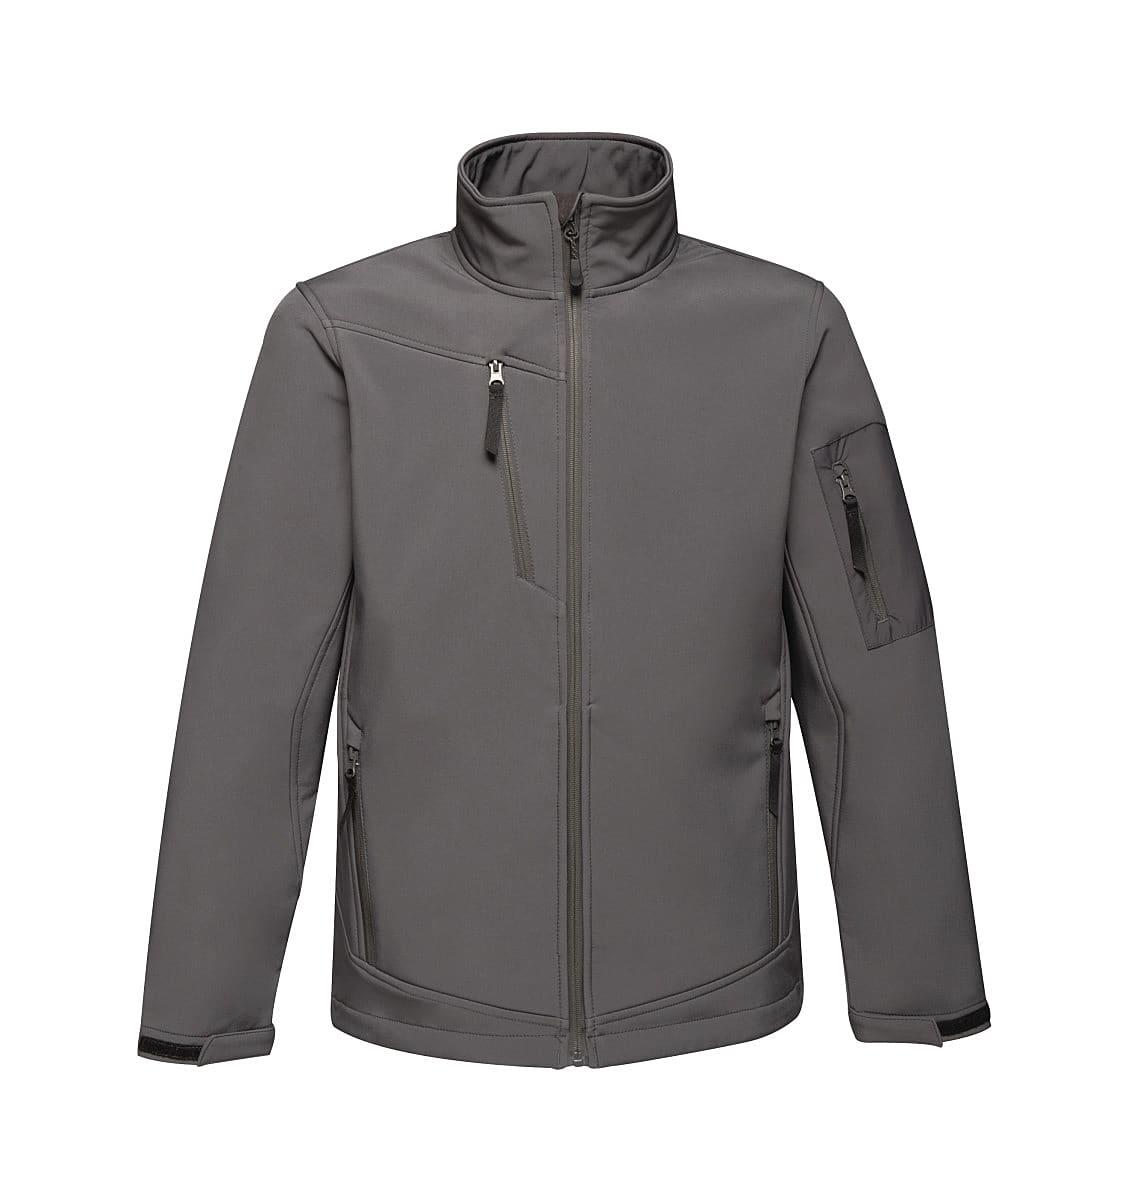 Regatta Arcola Softshell Jacket in Seal Grey / Black (Product Code: TRA674)